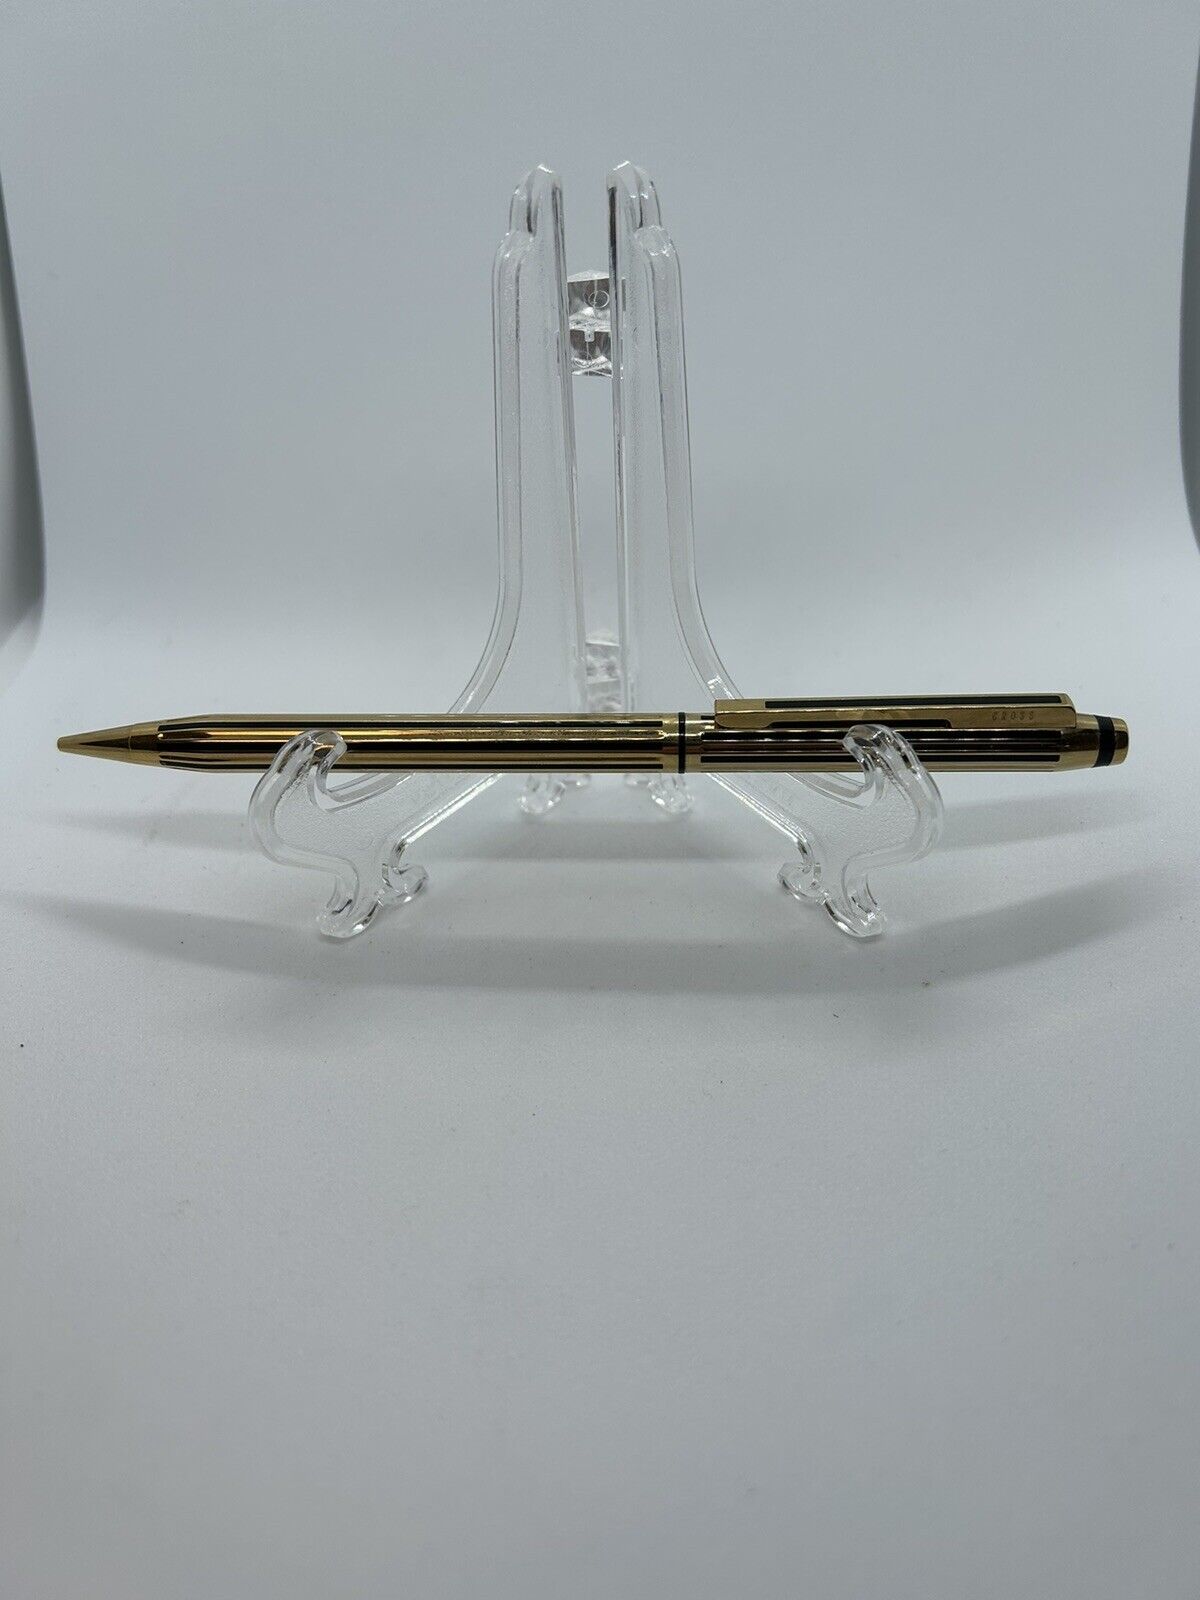 Cross Signature Pencil 22kt Gold with Black Laquer